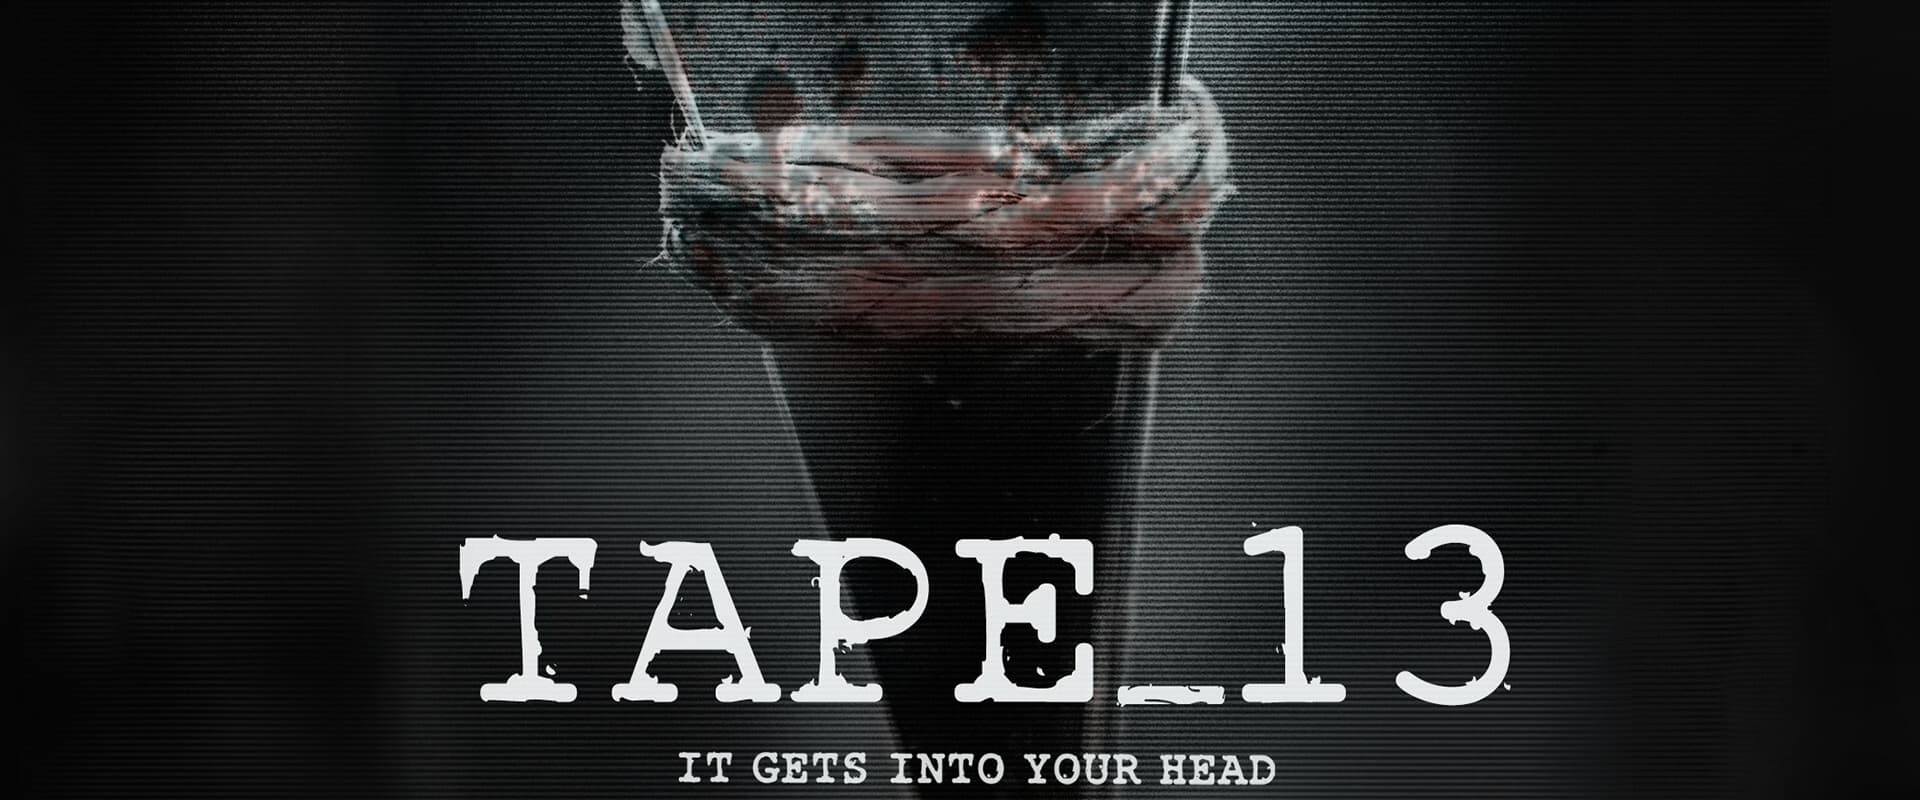 Tape_13